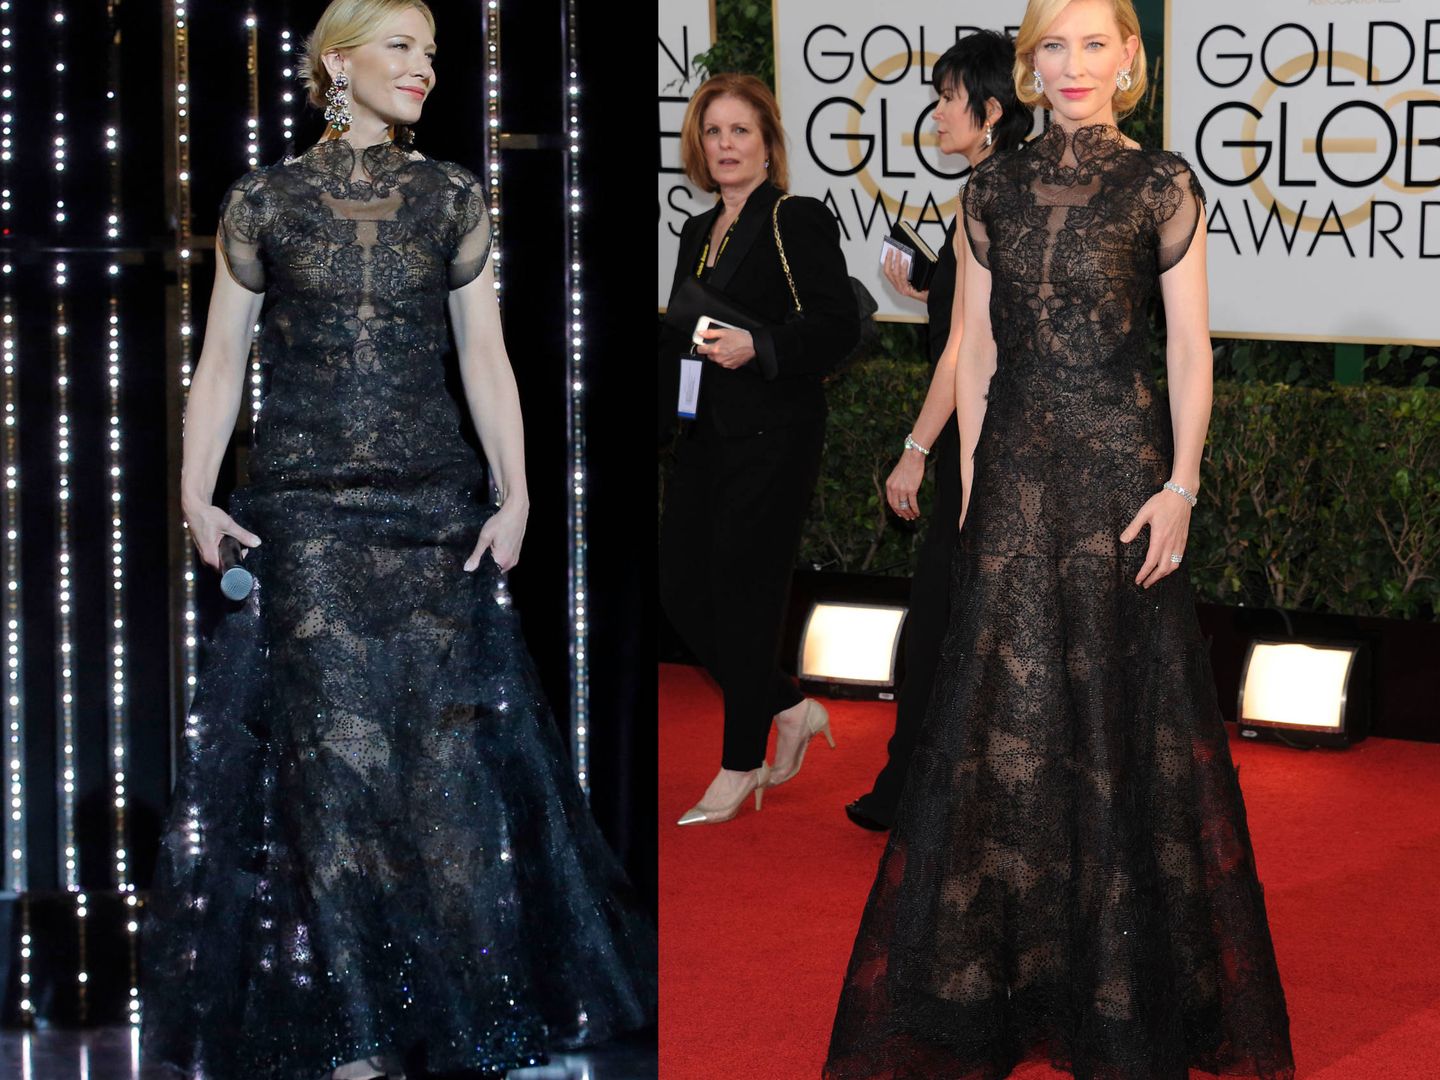 Cate Blanchett en 2018 (izqda) y 2014 (dcha). (Gtresonline)